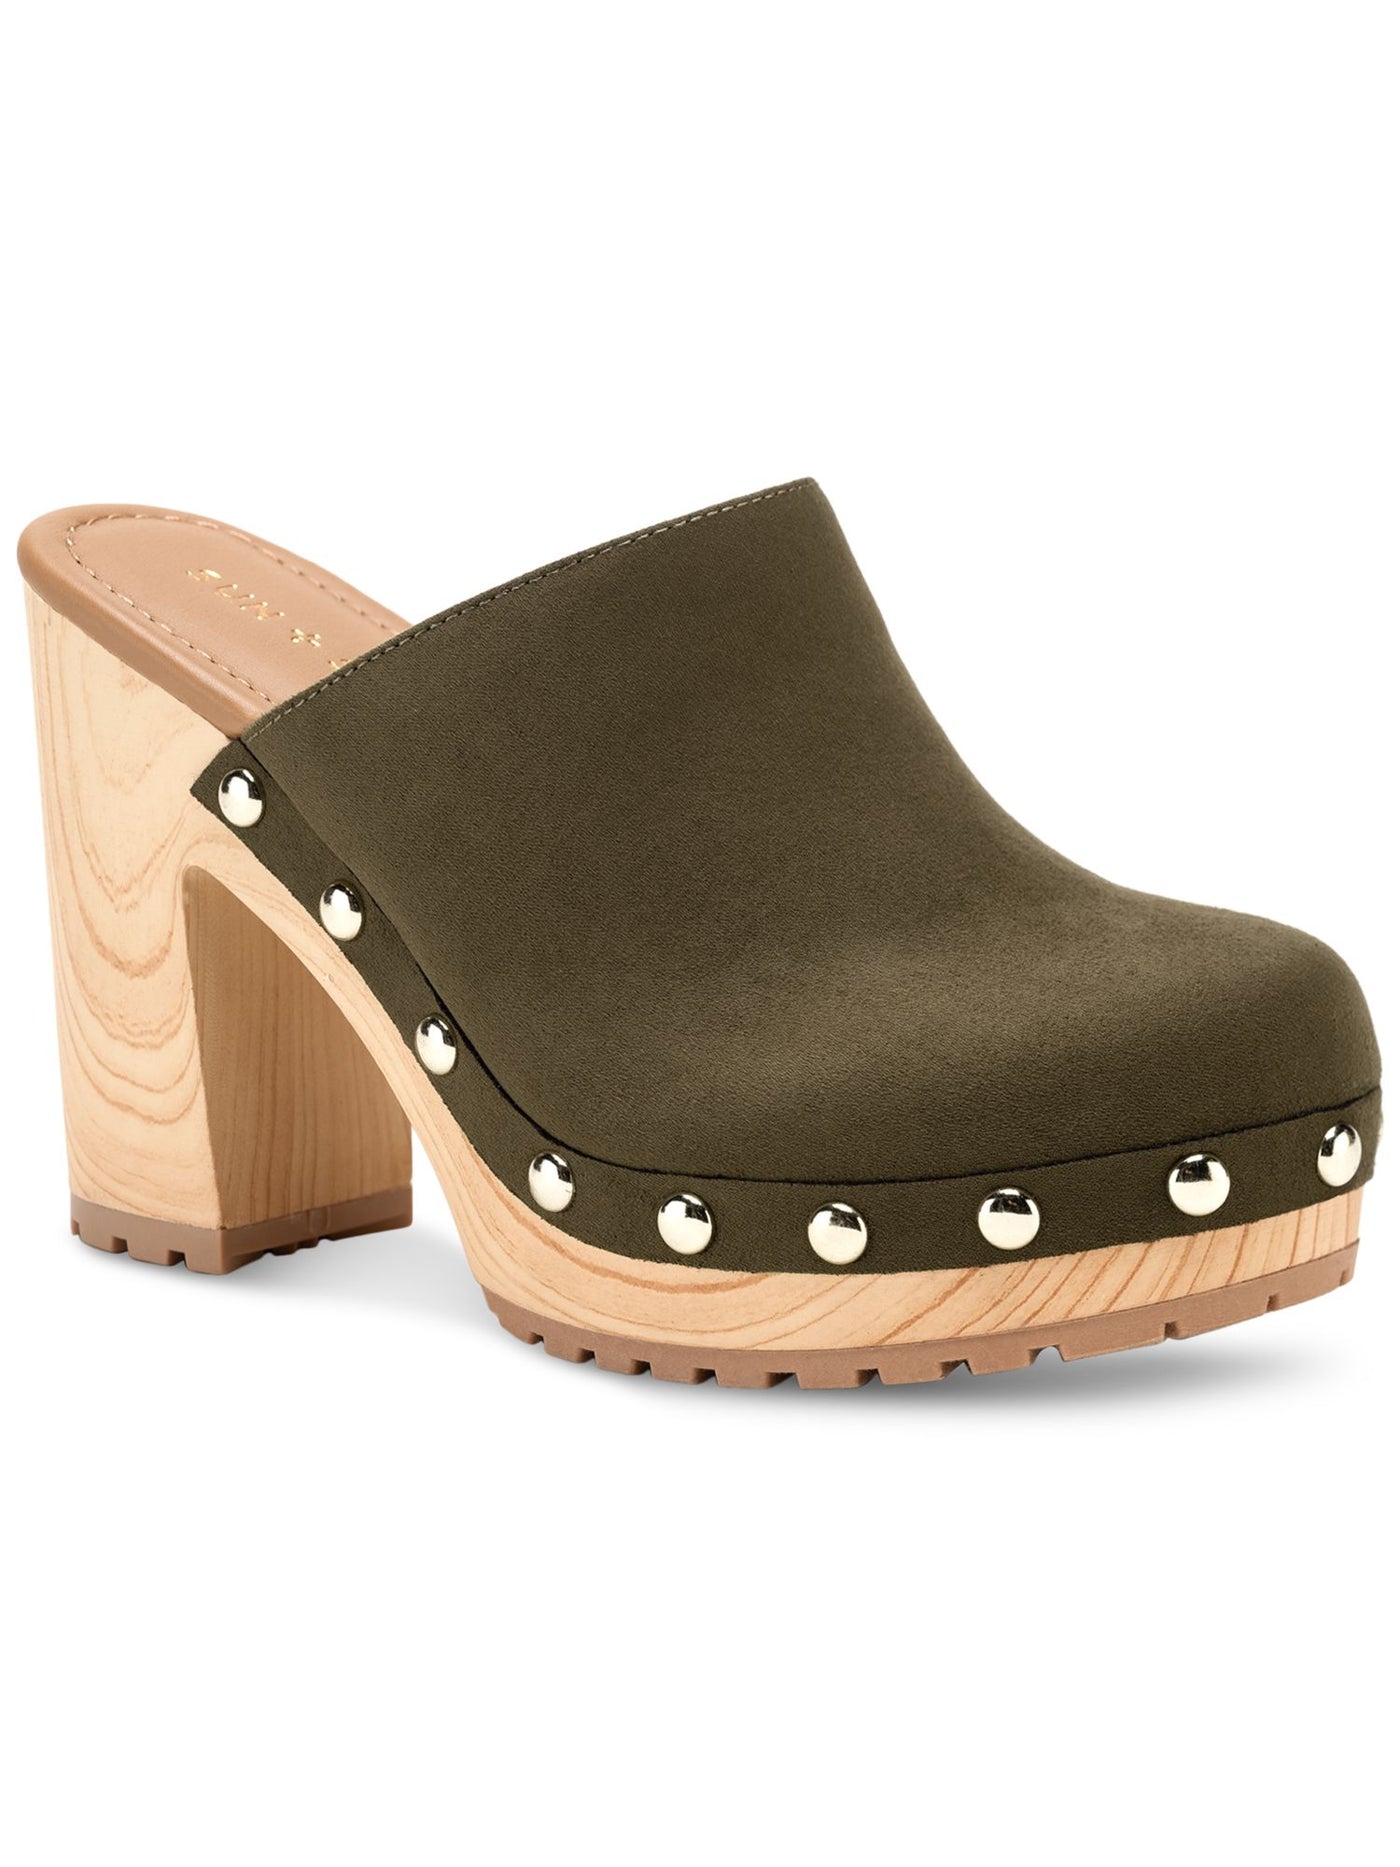 SUN STONE Womens Green 1" Platform Goring Studded Padded Taanya Round Toe Block Heel Slip On Clogs Shoes 6 M